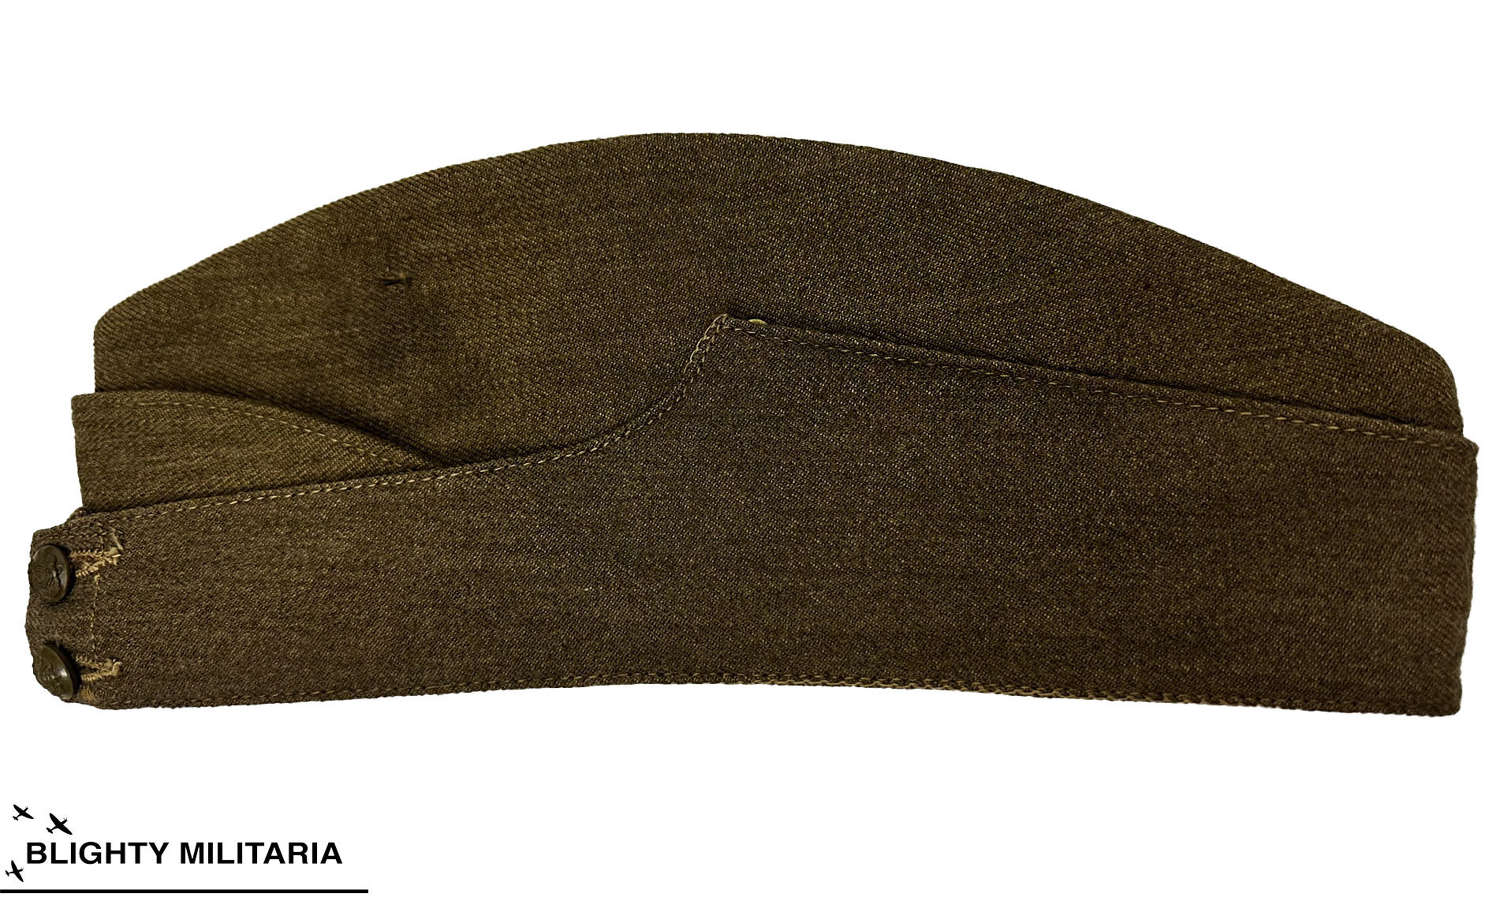 Original 1943 Dated British Army Field Service Cap - Size 7